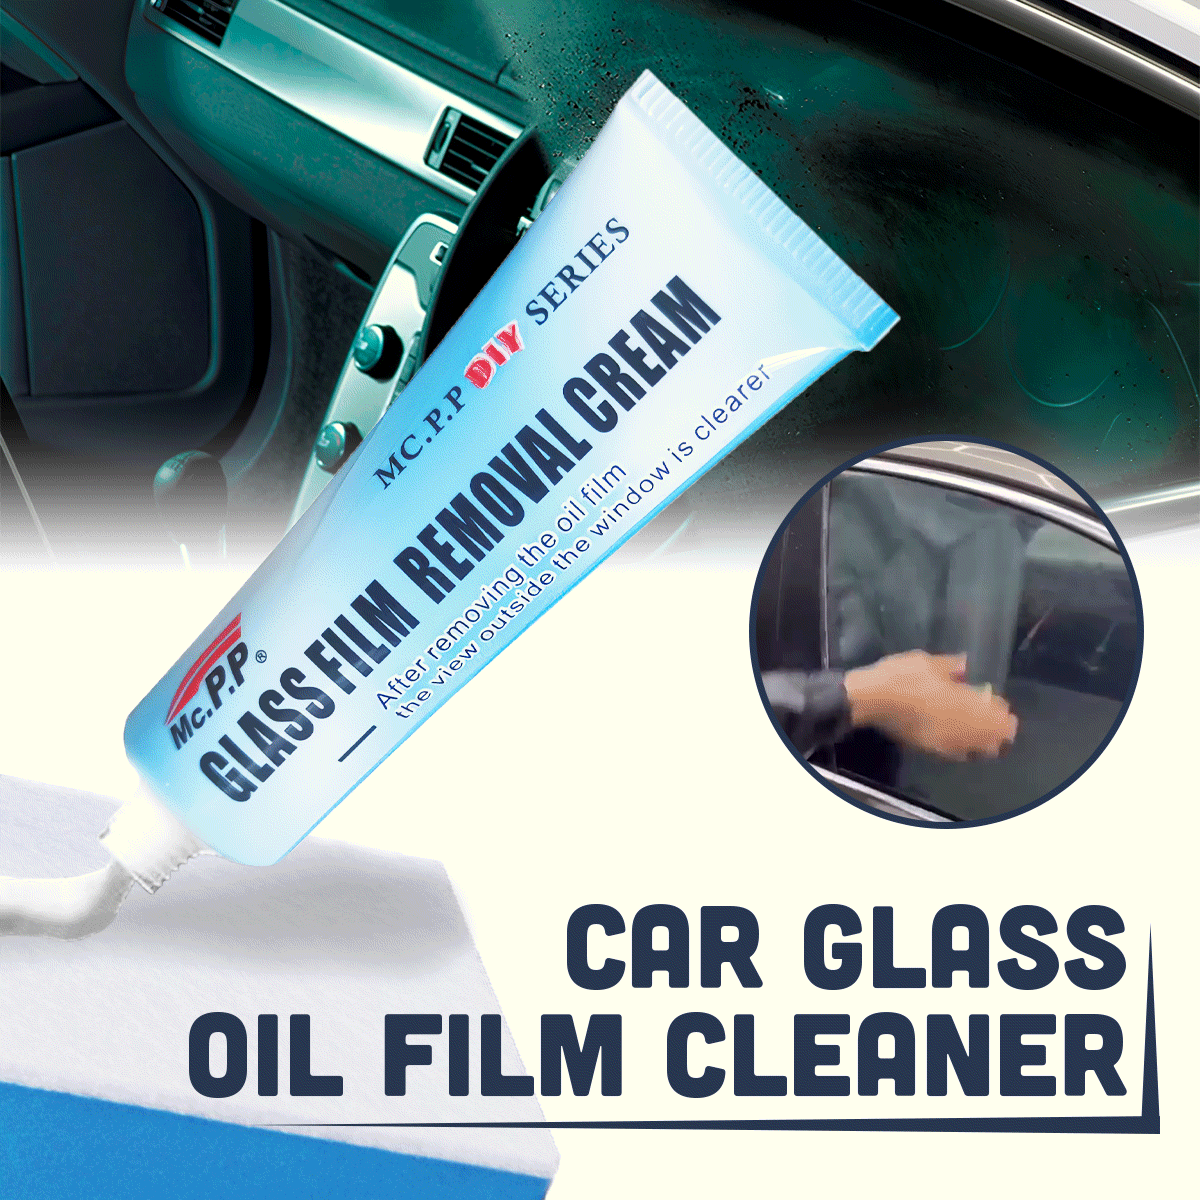 Car Glass Oil Film Cleaner 2.0